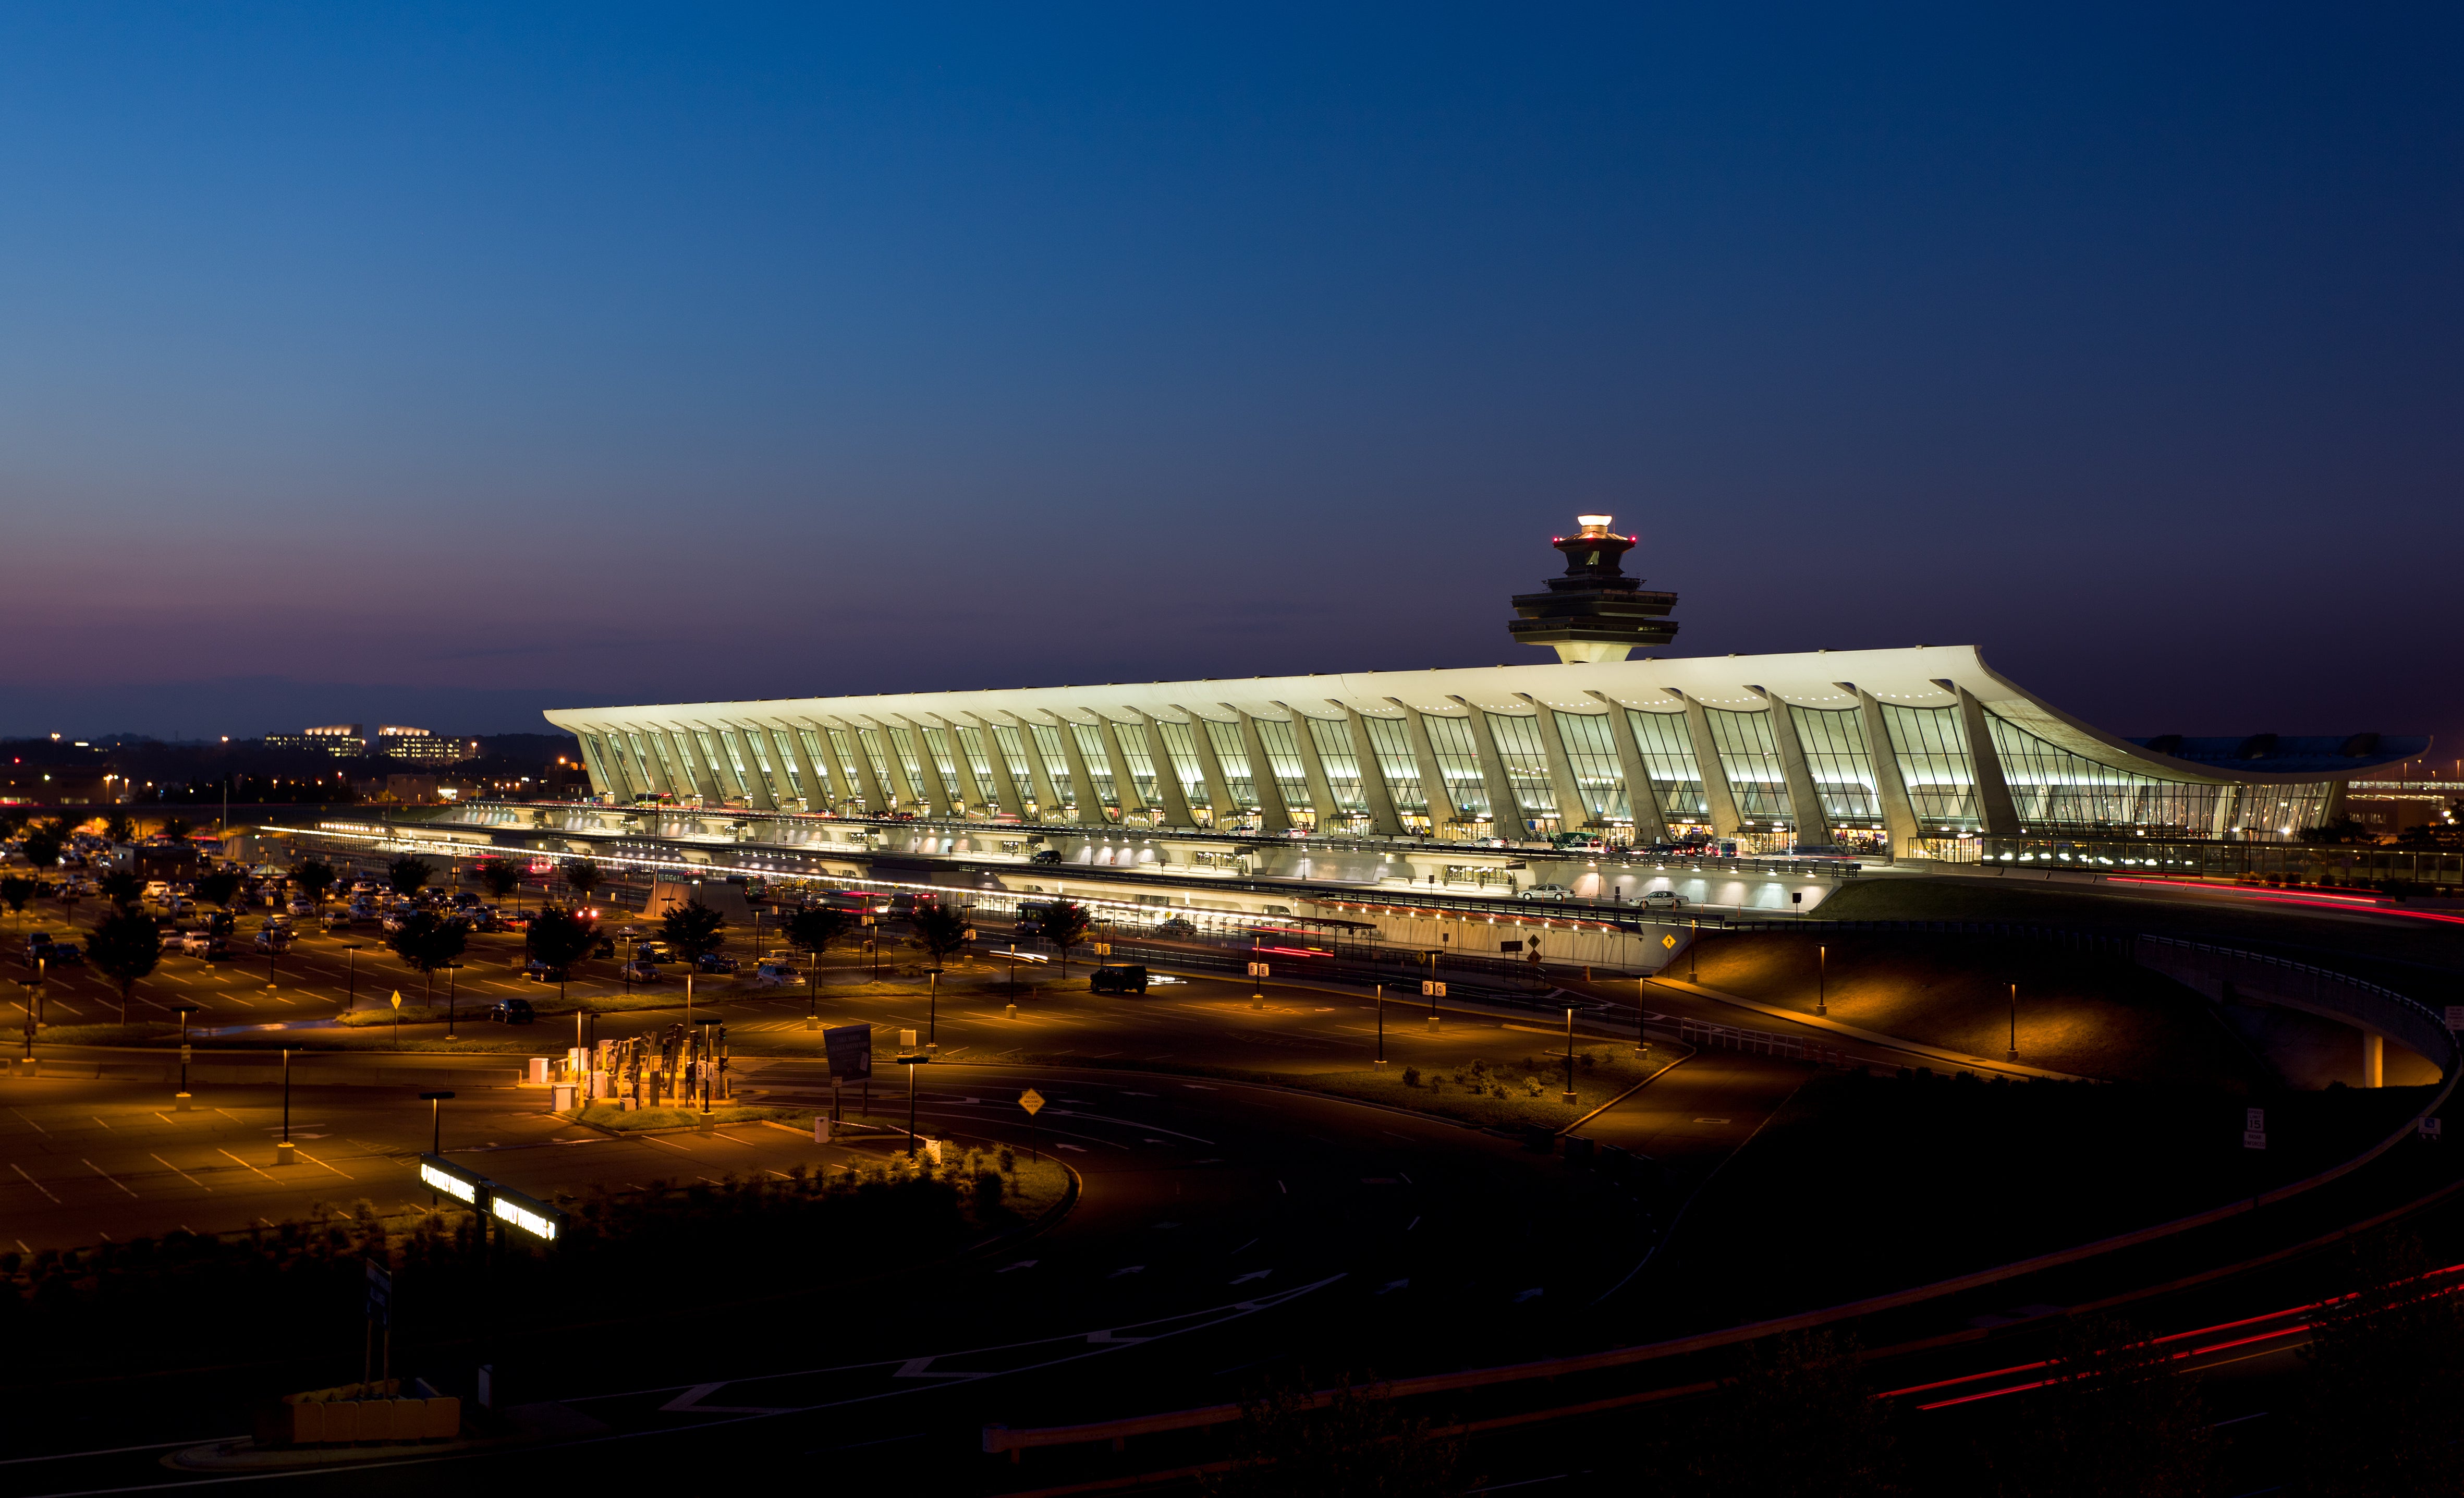 Washington Dulles International Airport in northern Virginia